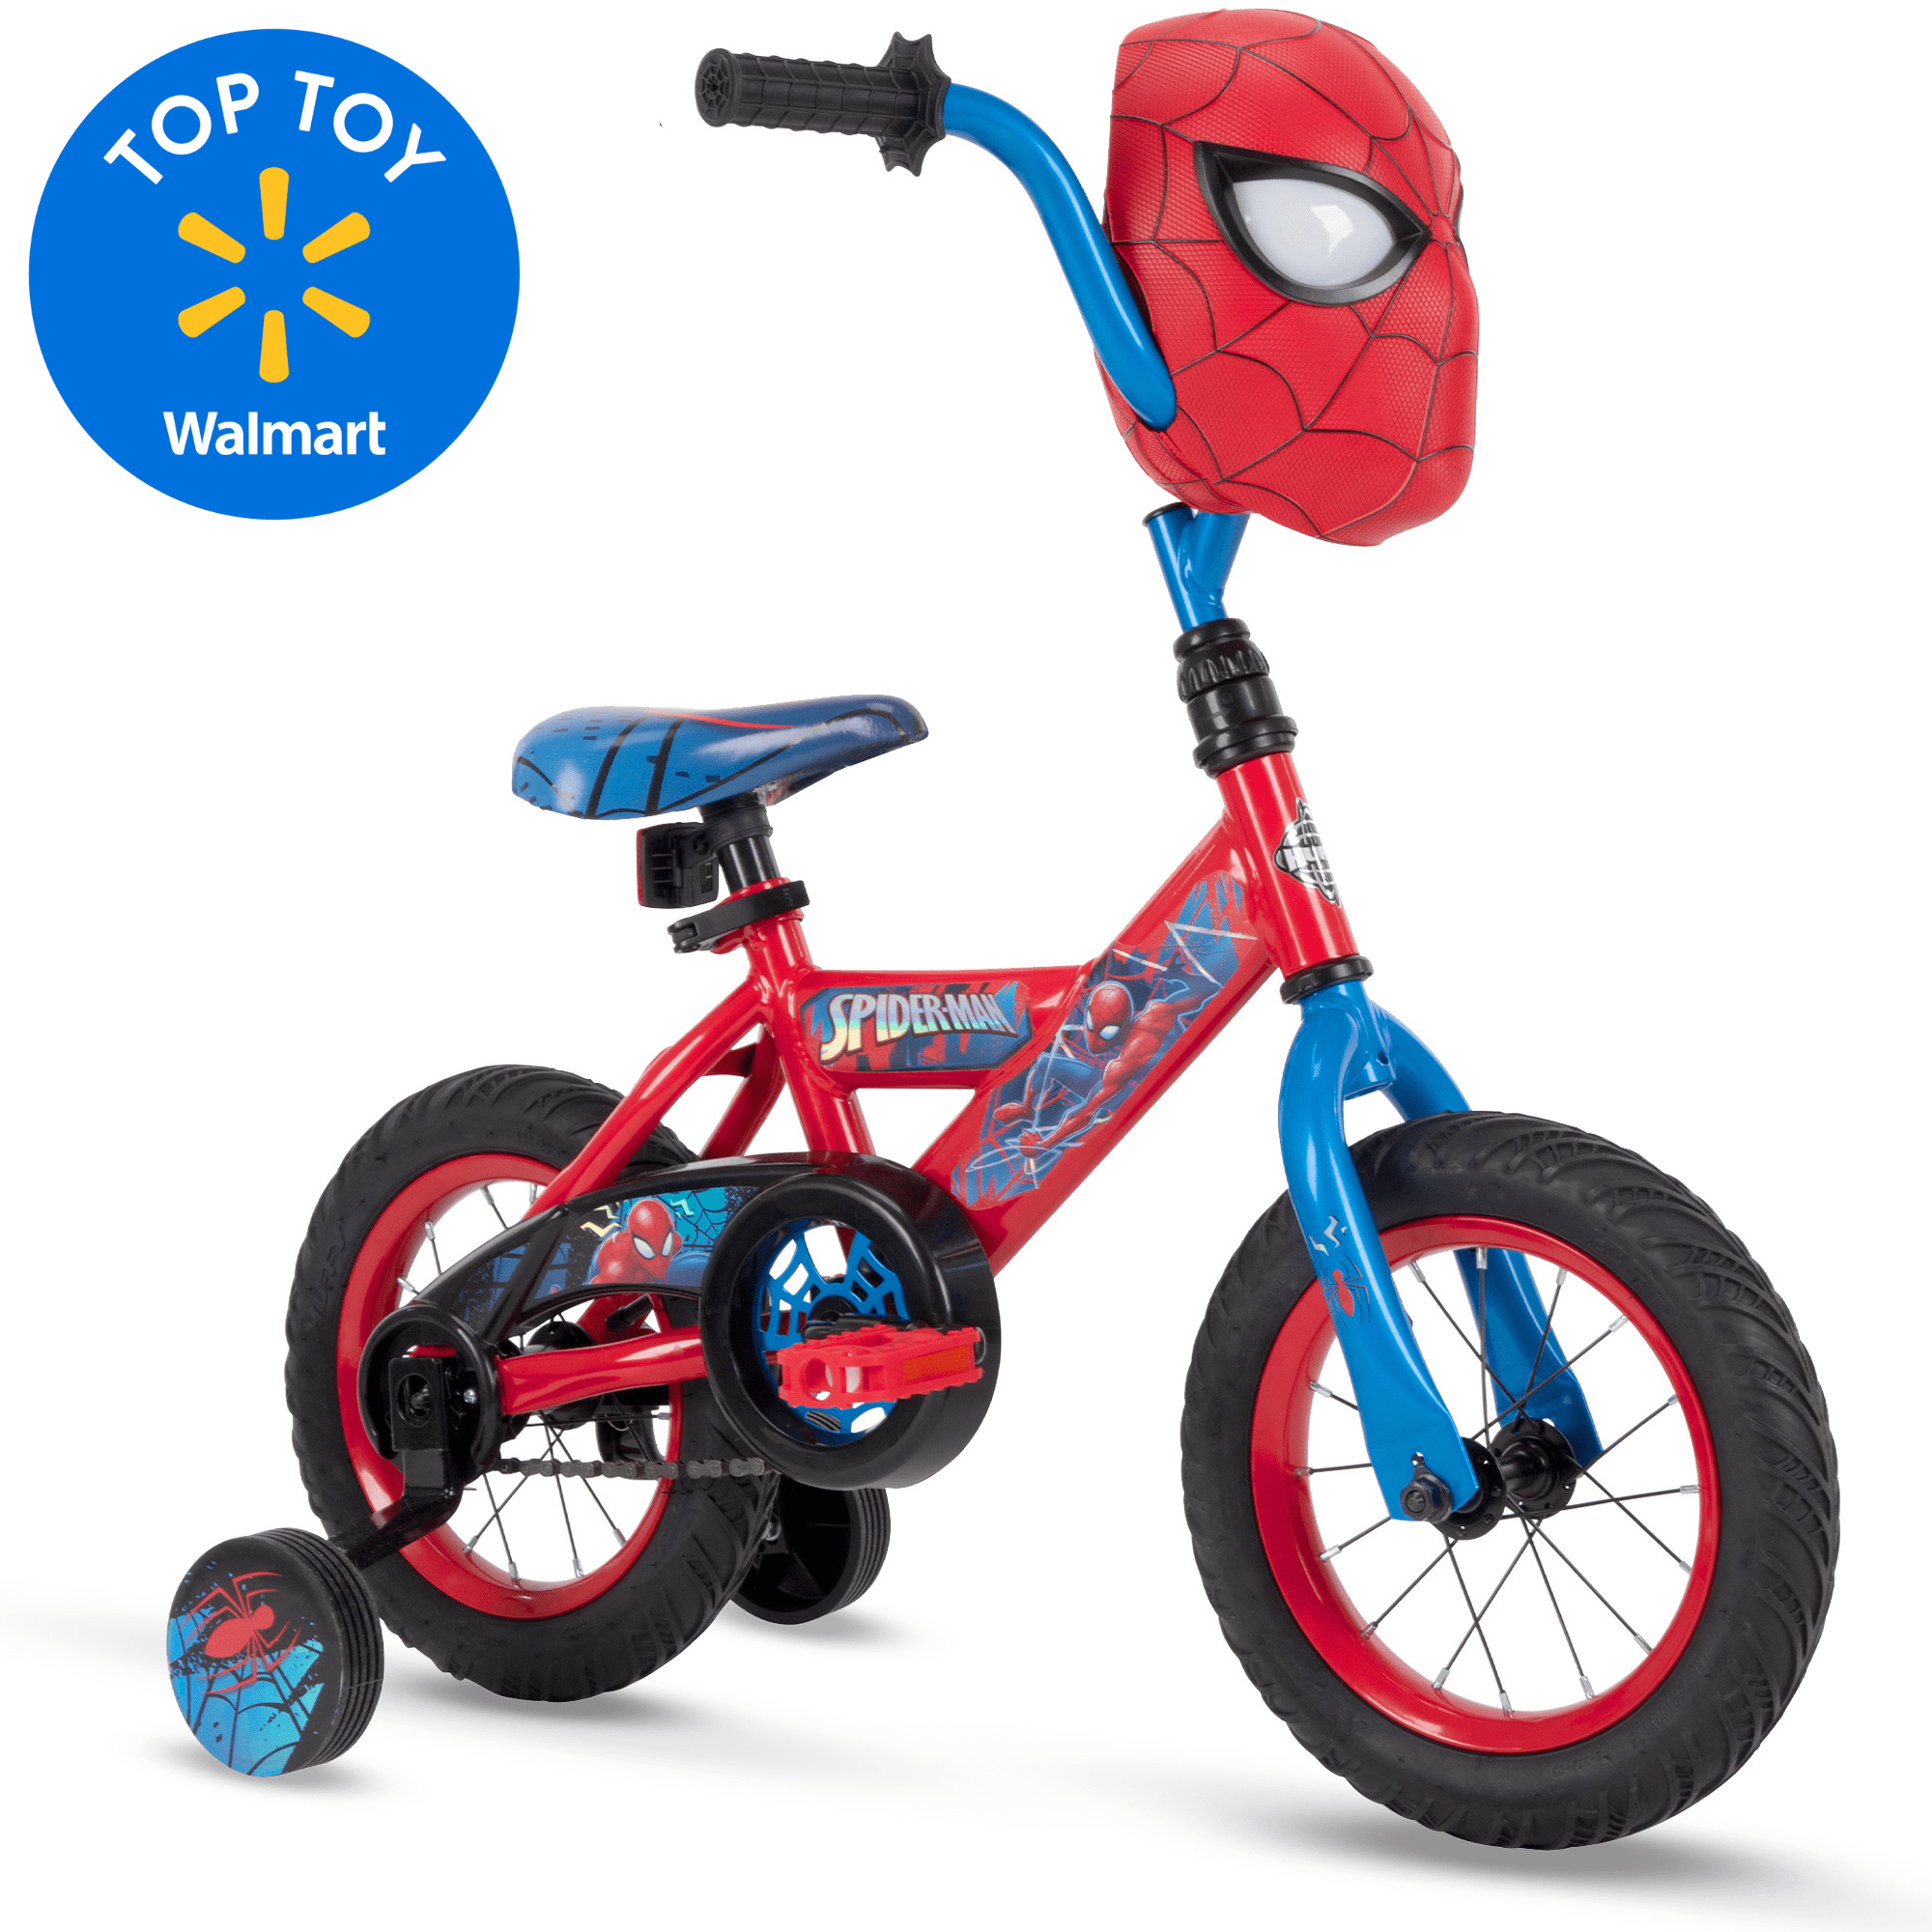 Marcha mala Odio Pais de Ciudadania 12" Marvel Spider-Man Bike with Training Wheels, for Boys', Red by Huffy -  Walmart.com